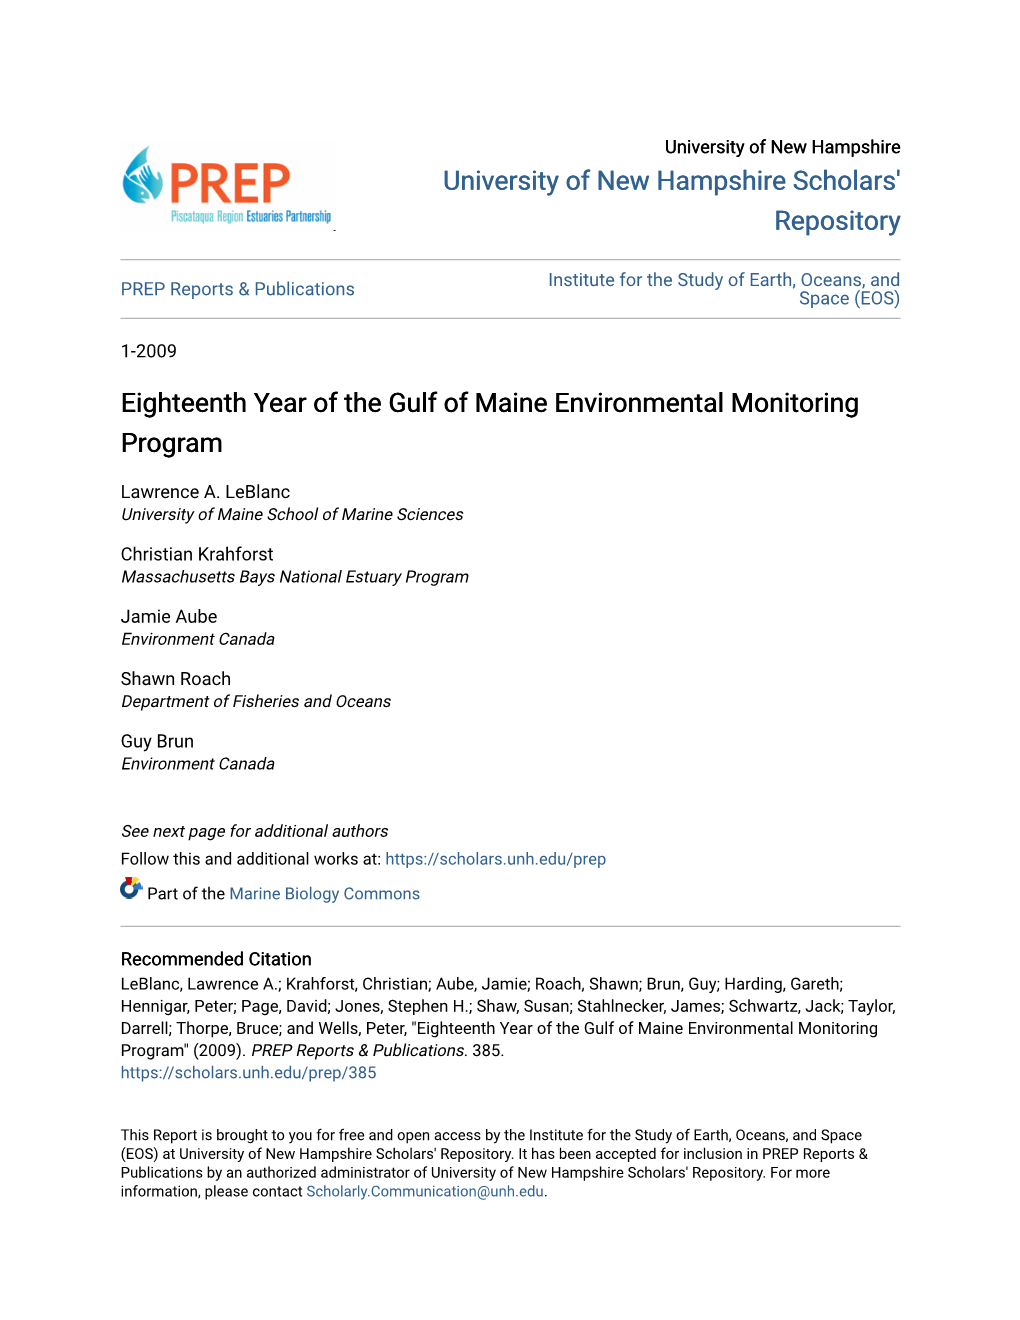 Eighteenth Year of the Gulf of Maine Environmental Monitoring Program